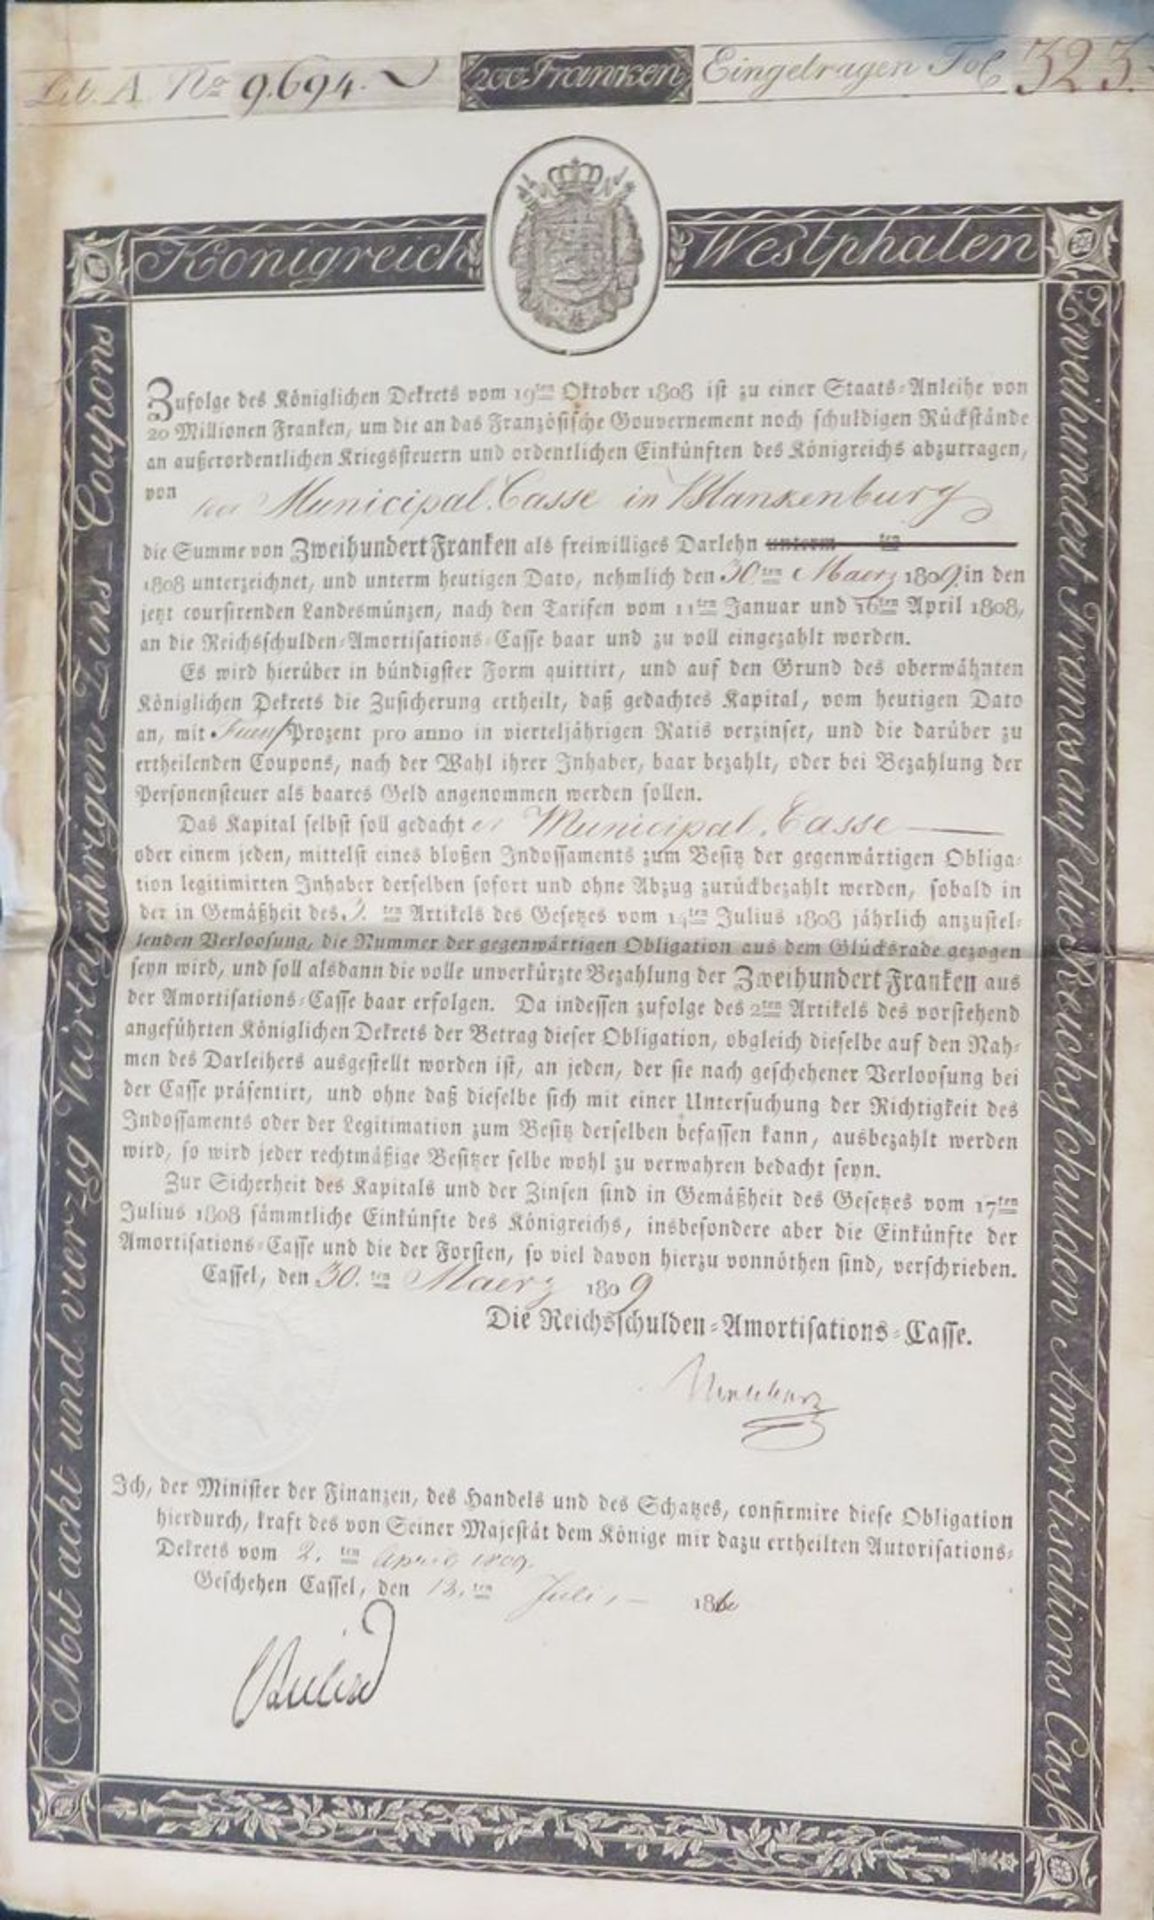 Obligation des Königreichs Westphalen über 200 Franken inkl. 5 1/2 Blatt Zinscoupons. - Image 3 of 3